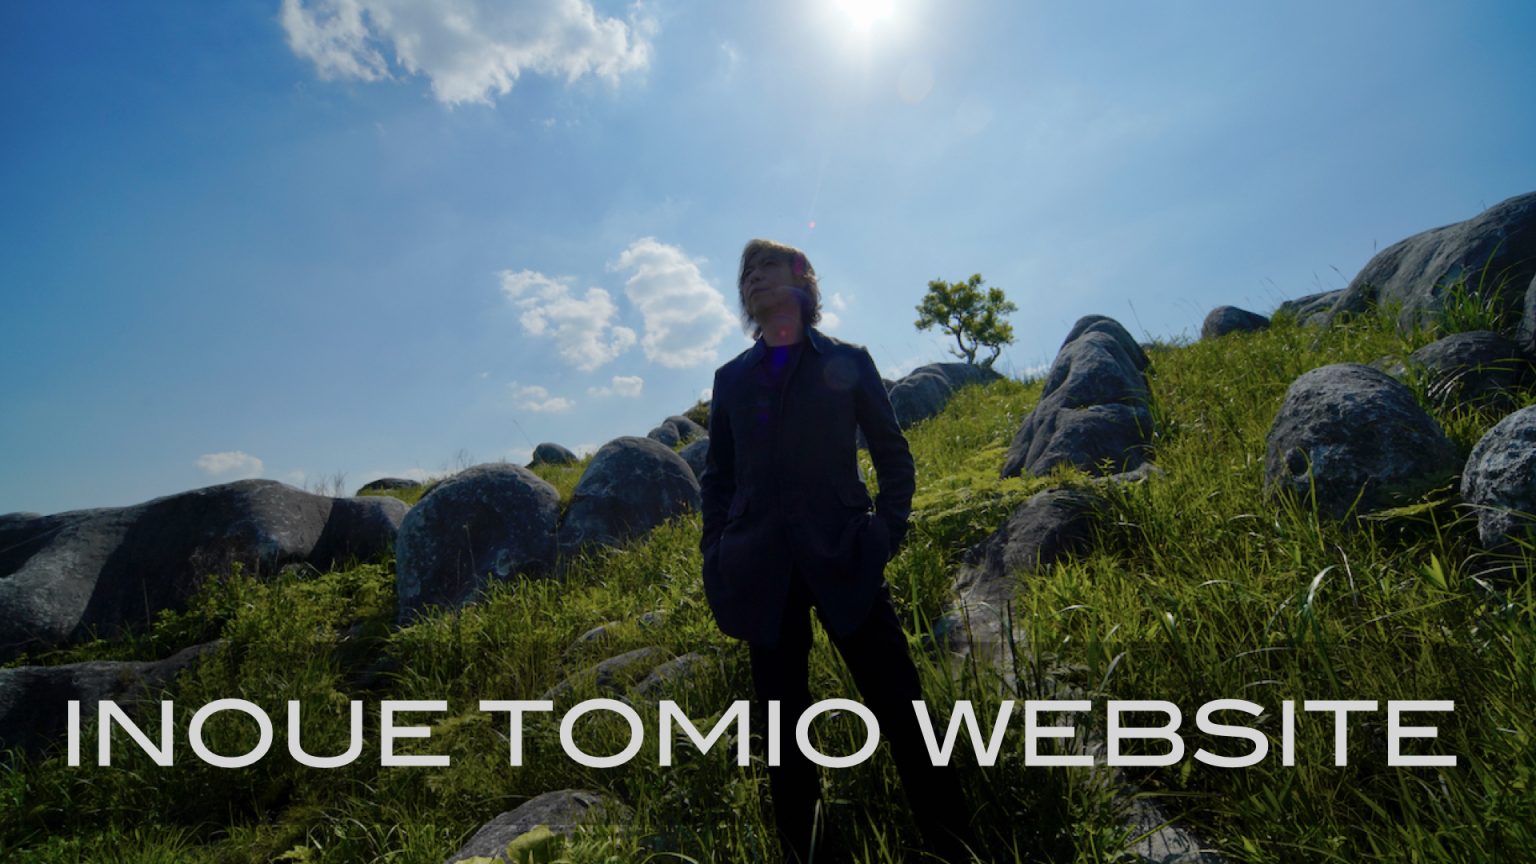 INOUE TOMIO WEBSITE